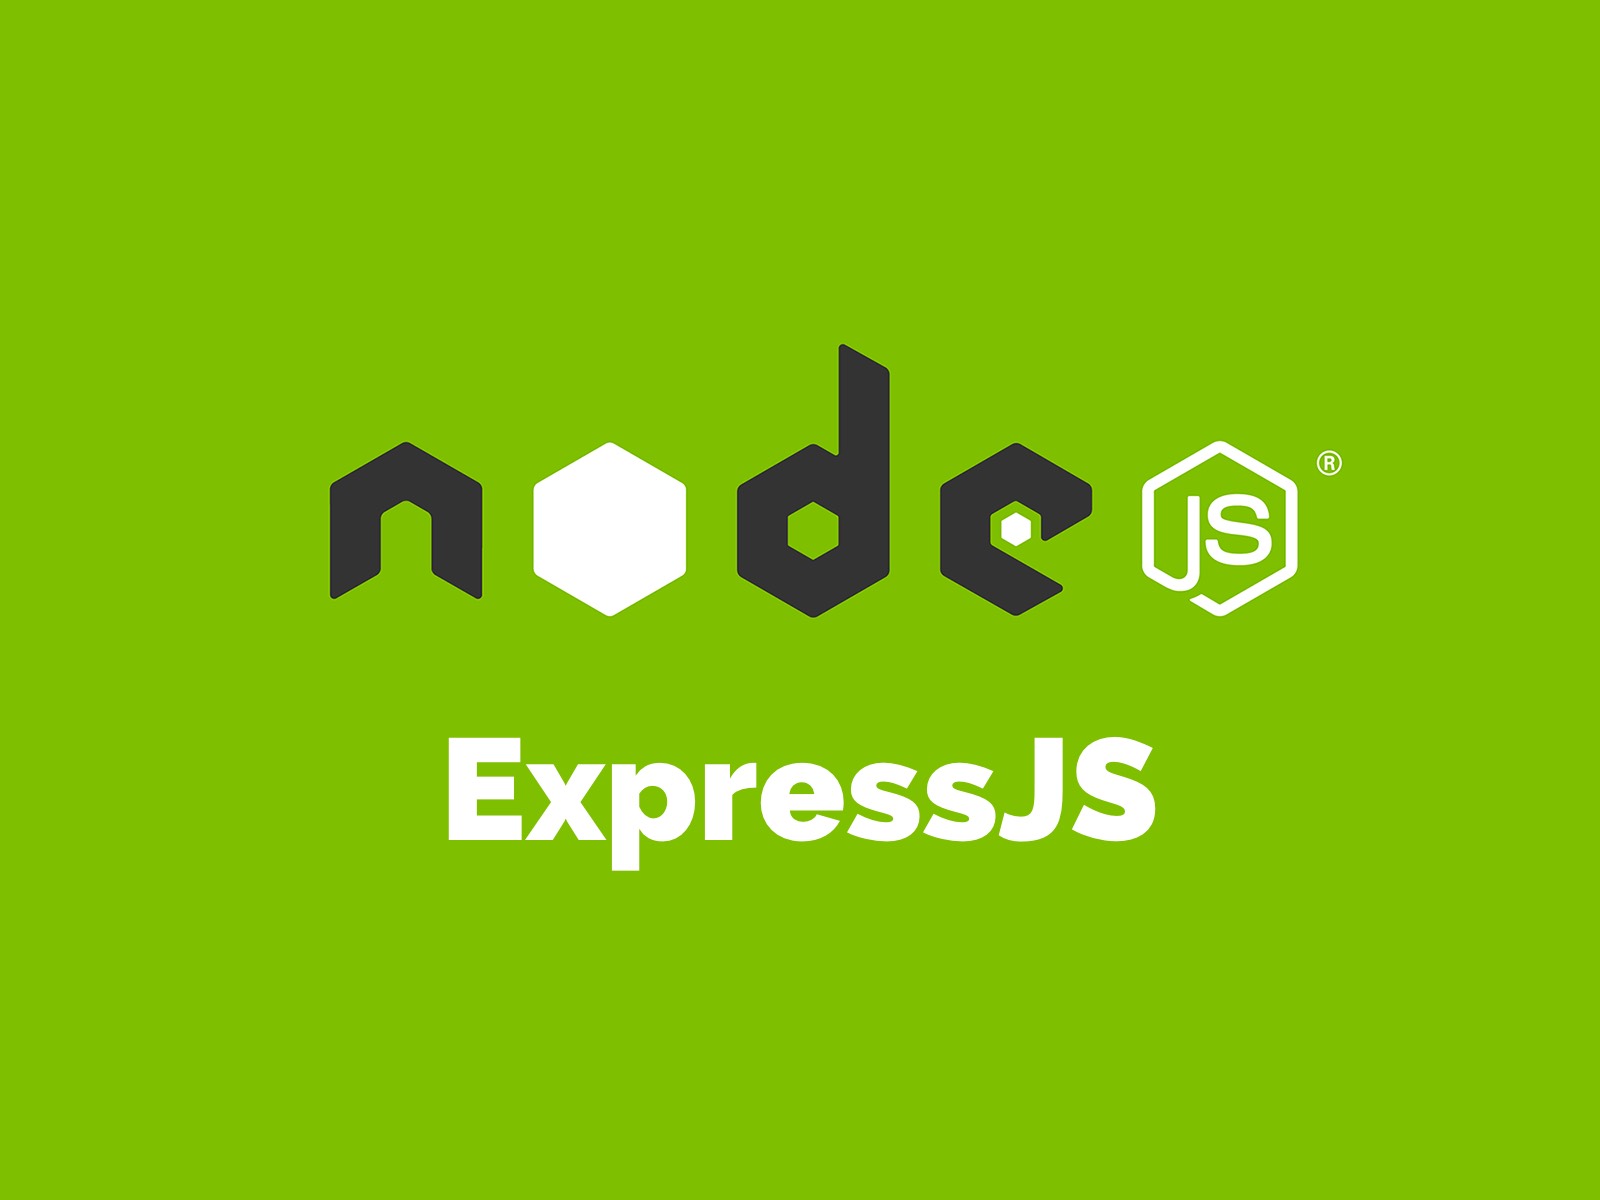 install express globally npm